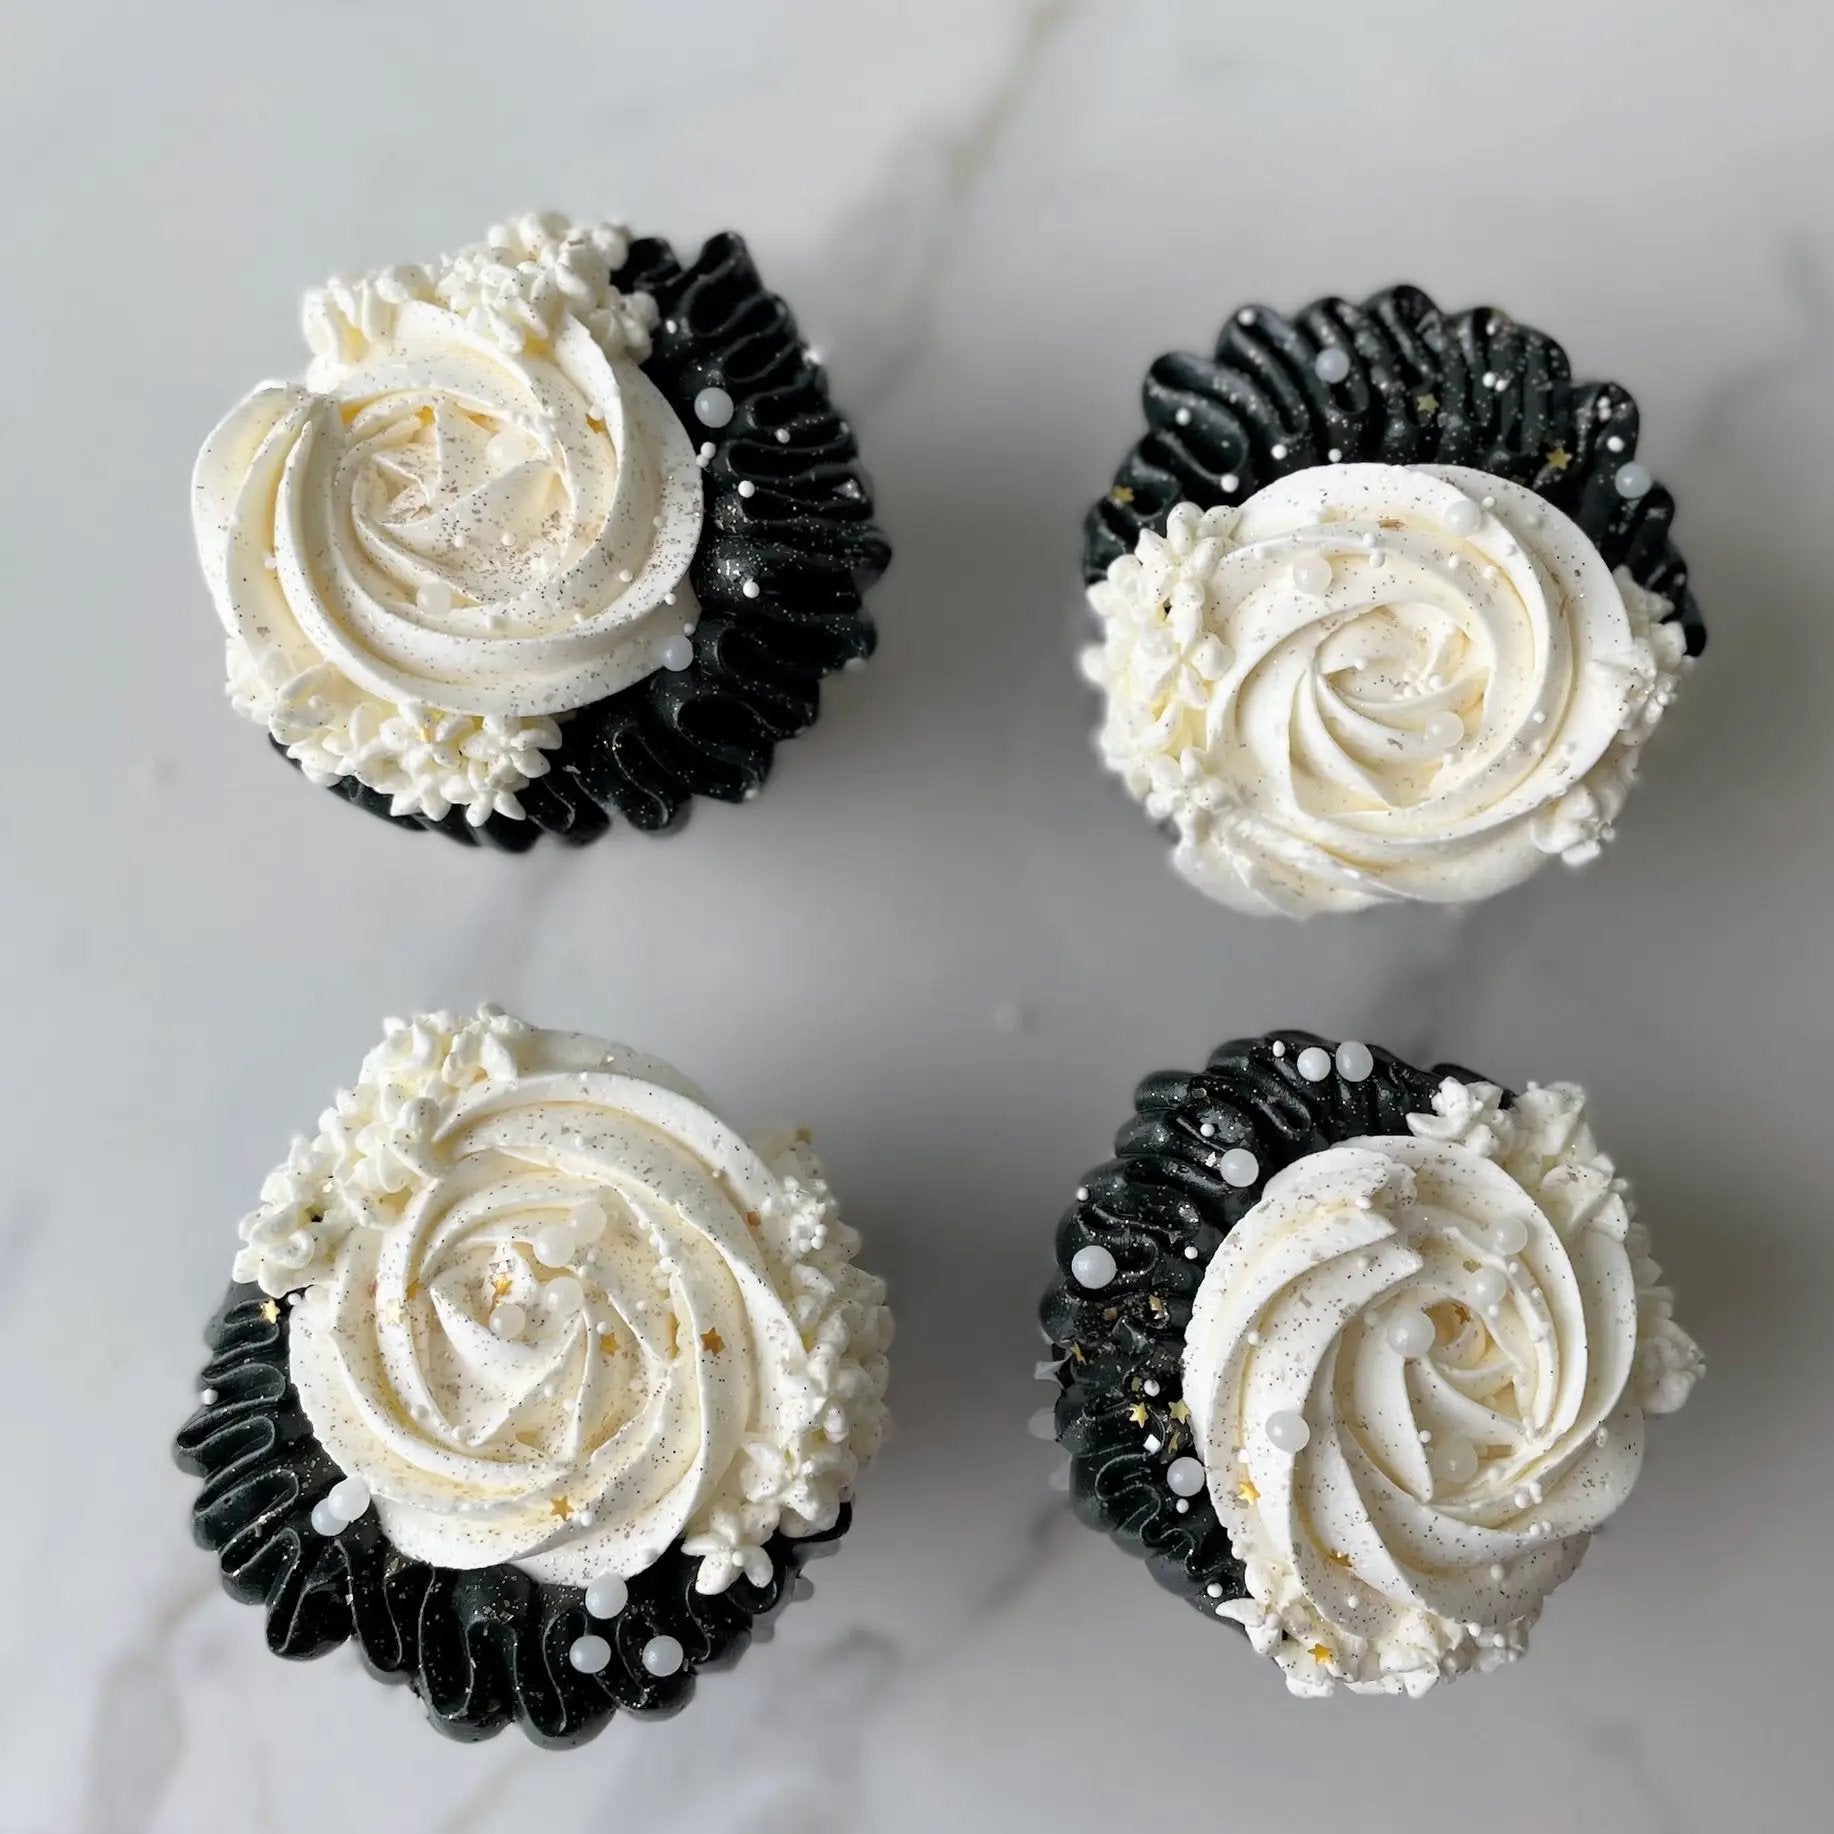 Buy Black, White & Gold Abstract Birthday Celebration Cupcakes | Celebrity Cake Studio